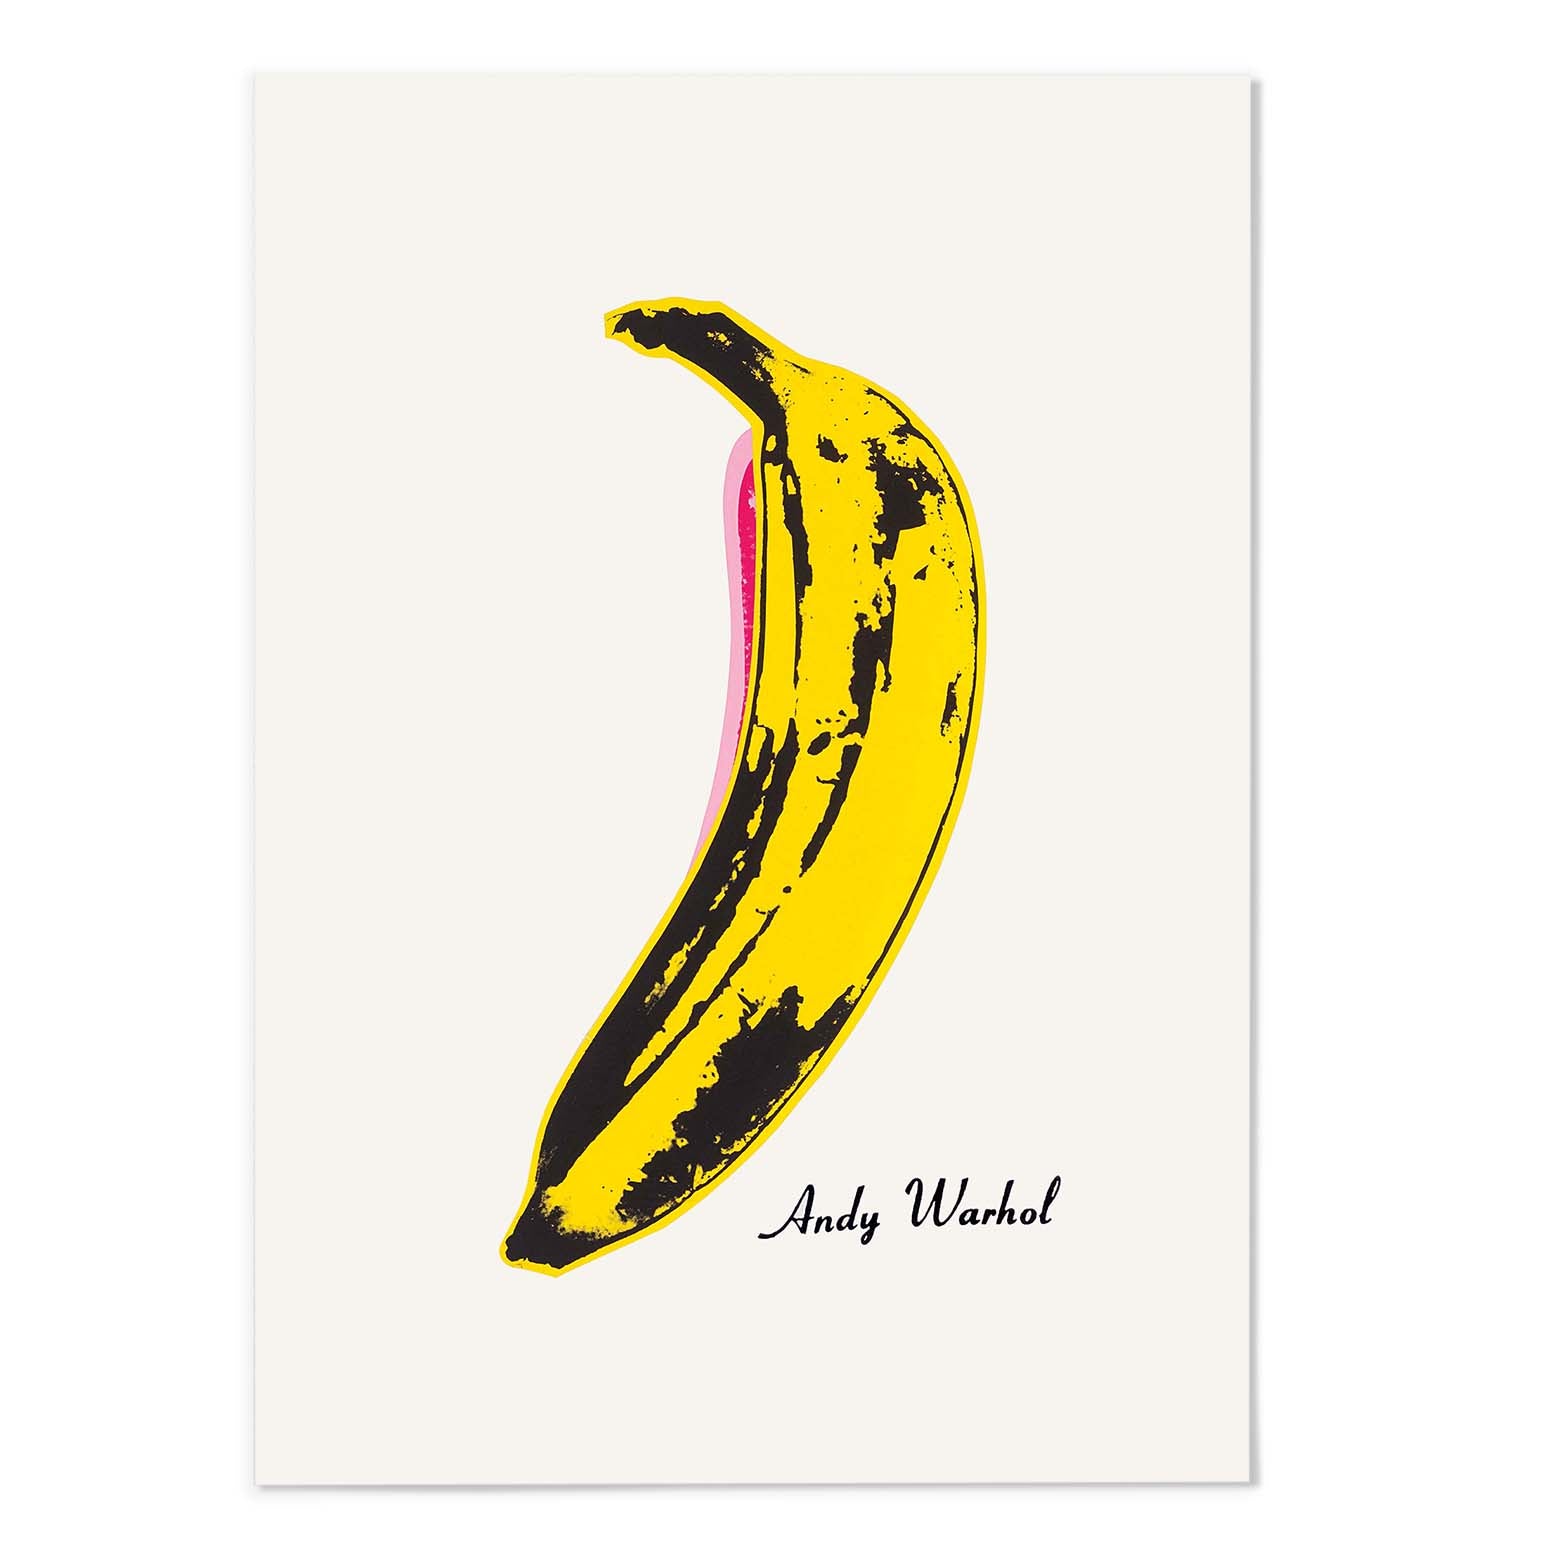 Banana Art Print